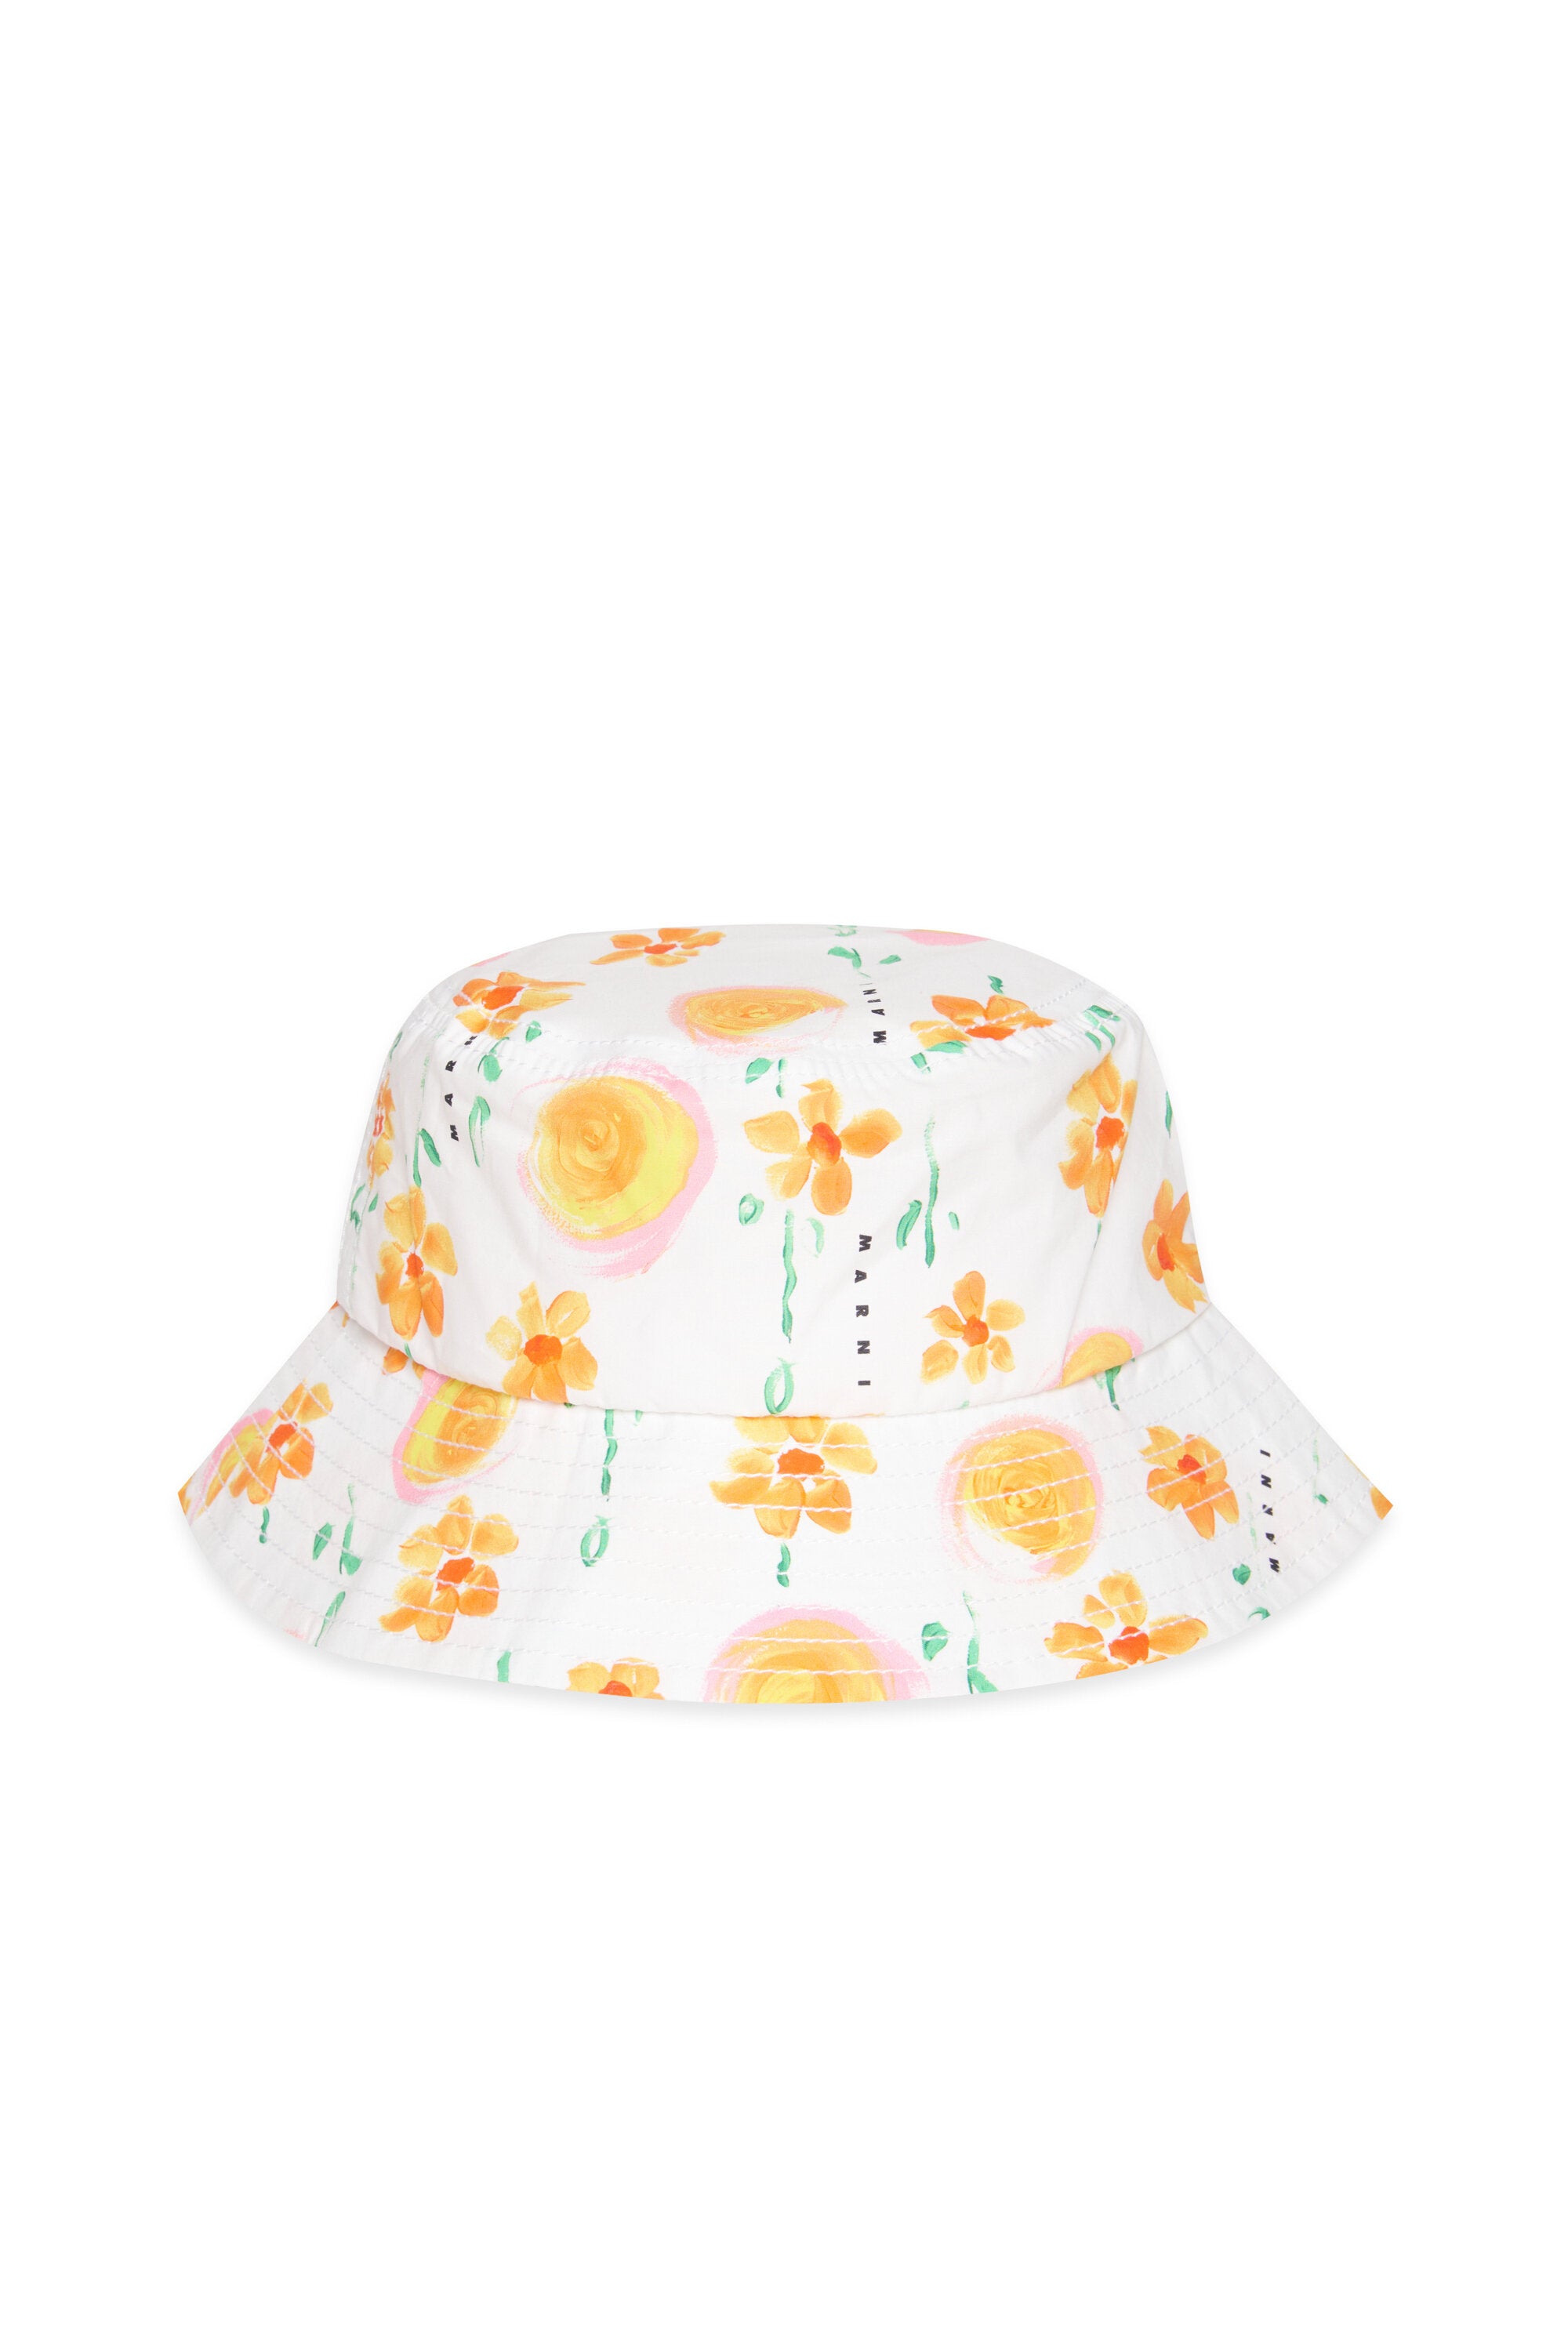 Sunny Day allover bucket hat